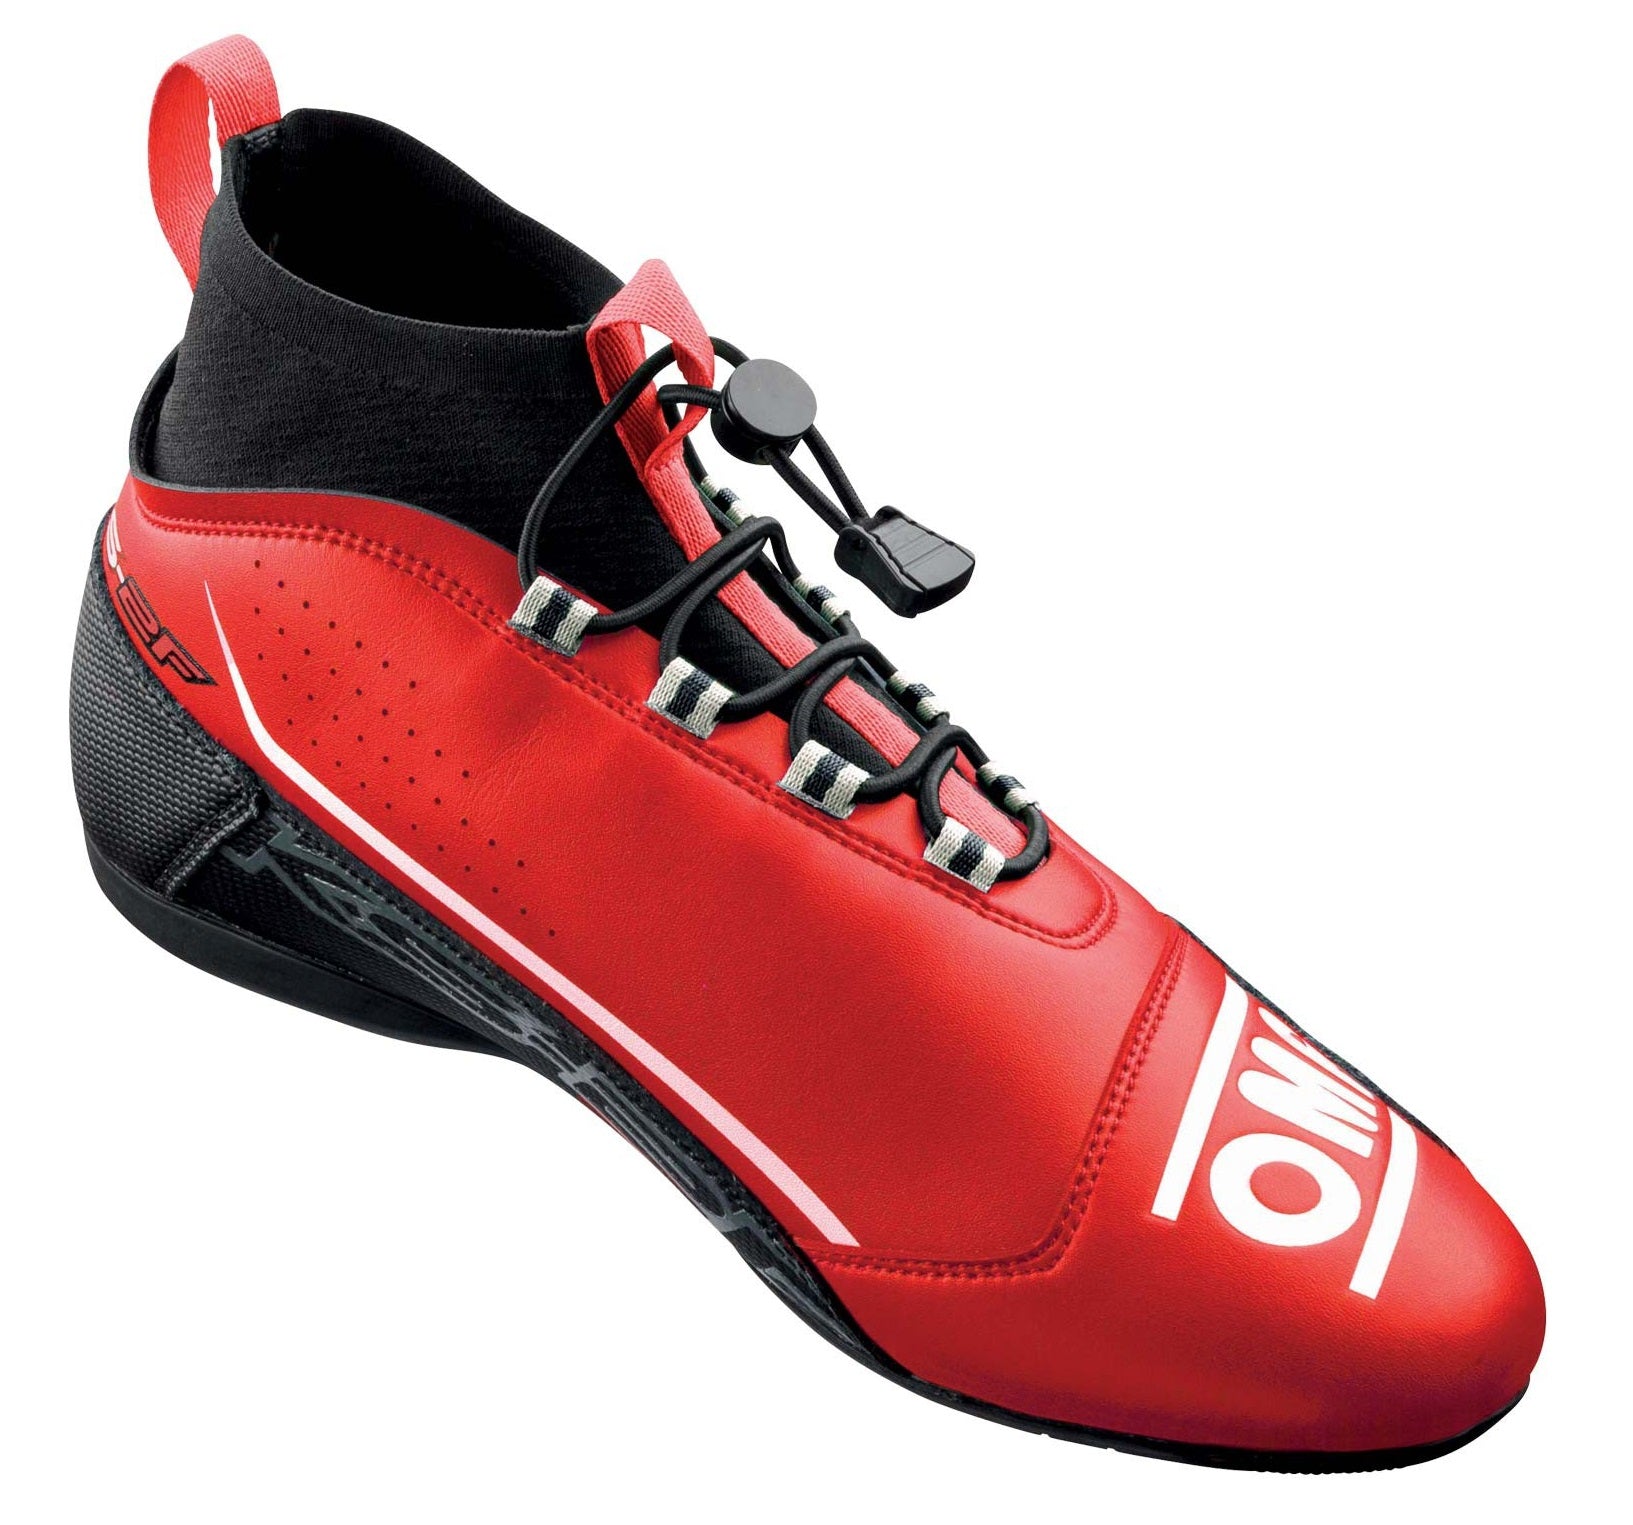 OMP KC0-0830-A01-060-35 KS-2F Karting shoes, red/black, size 35 Photo-1 